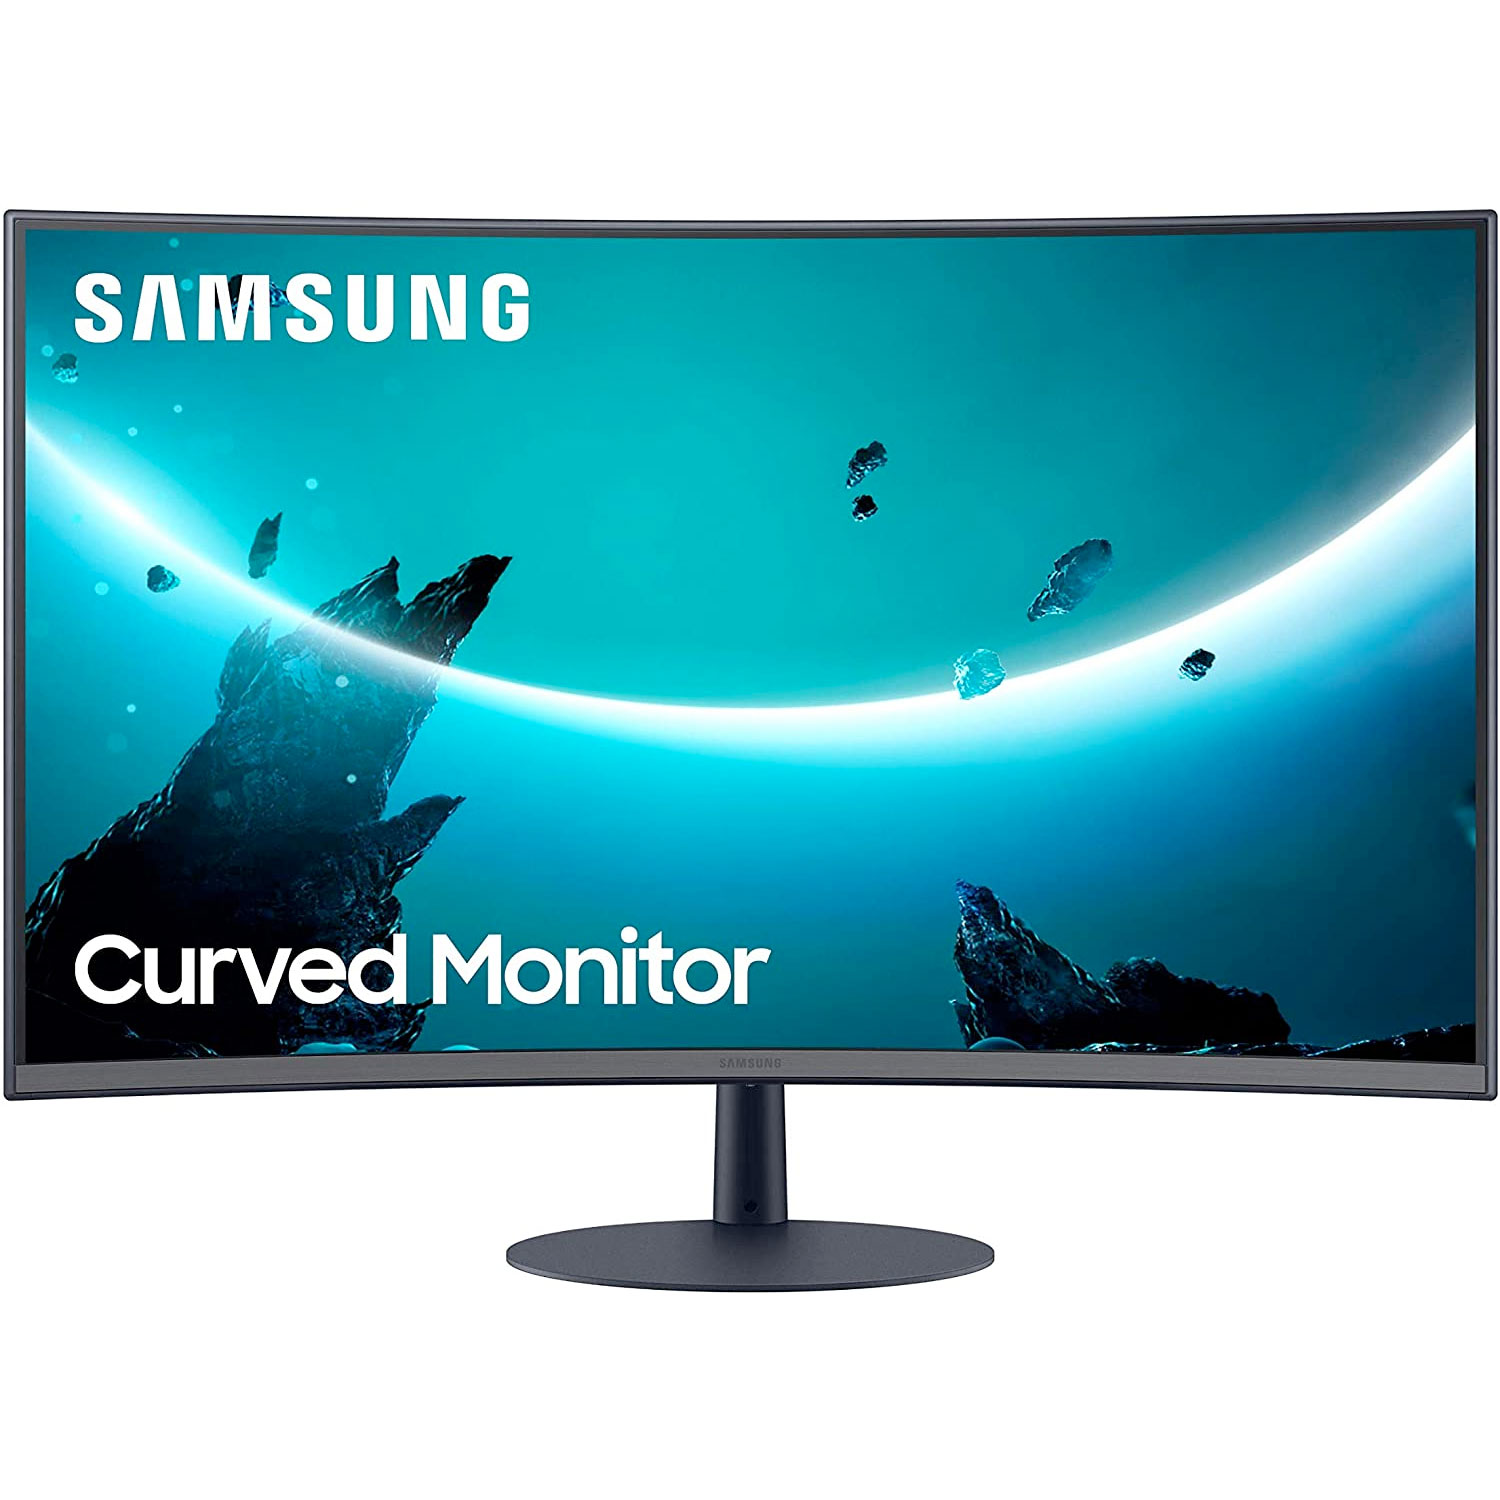 Amazon：Samsung LED 24吋全高清(Full HD)曲面电脑显示屏 (curved monitor)只卖$198